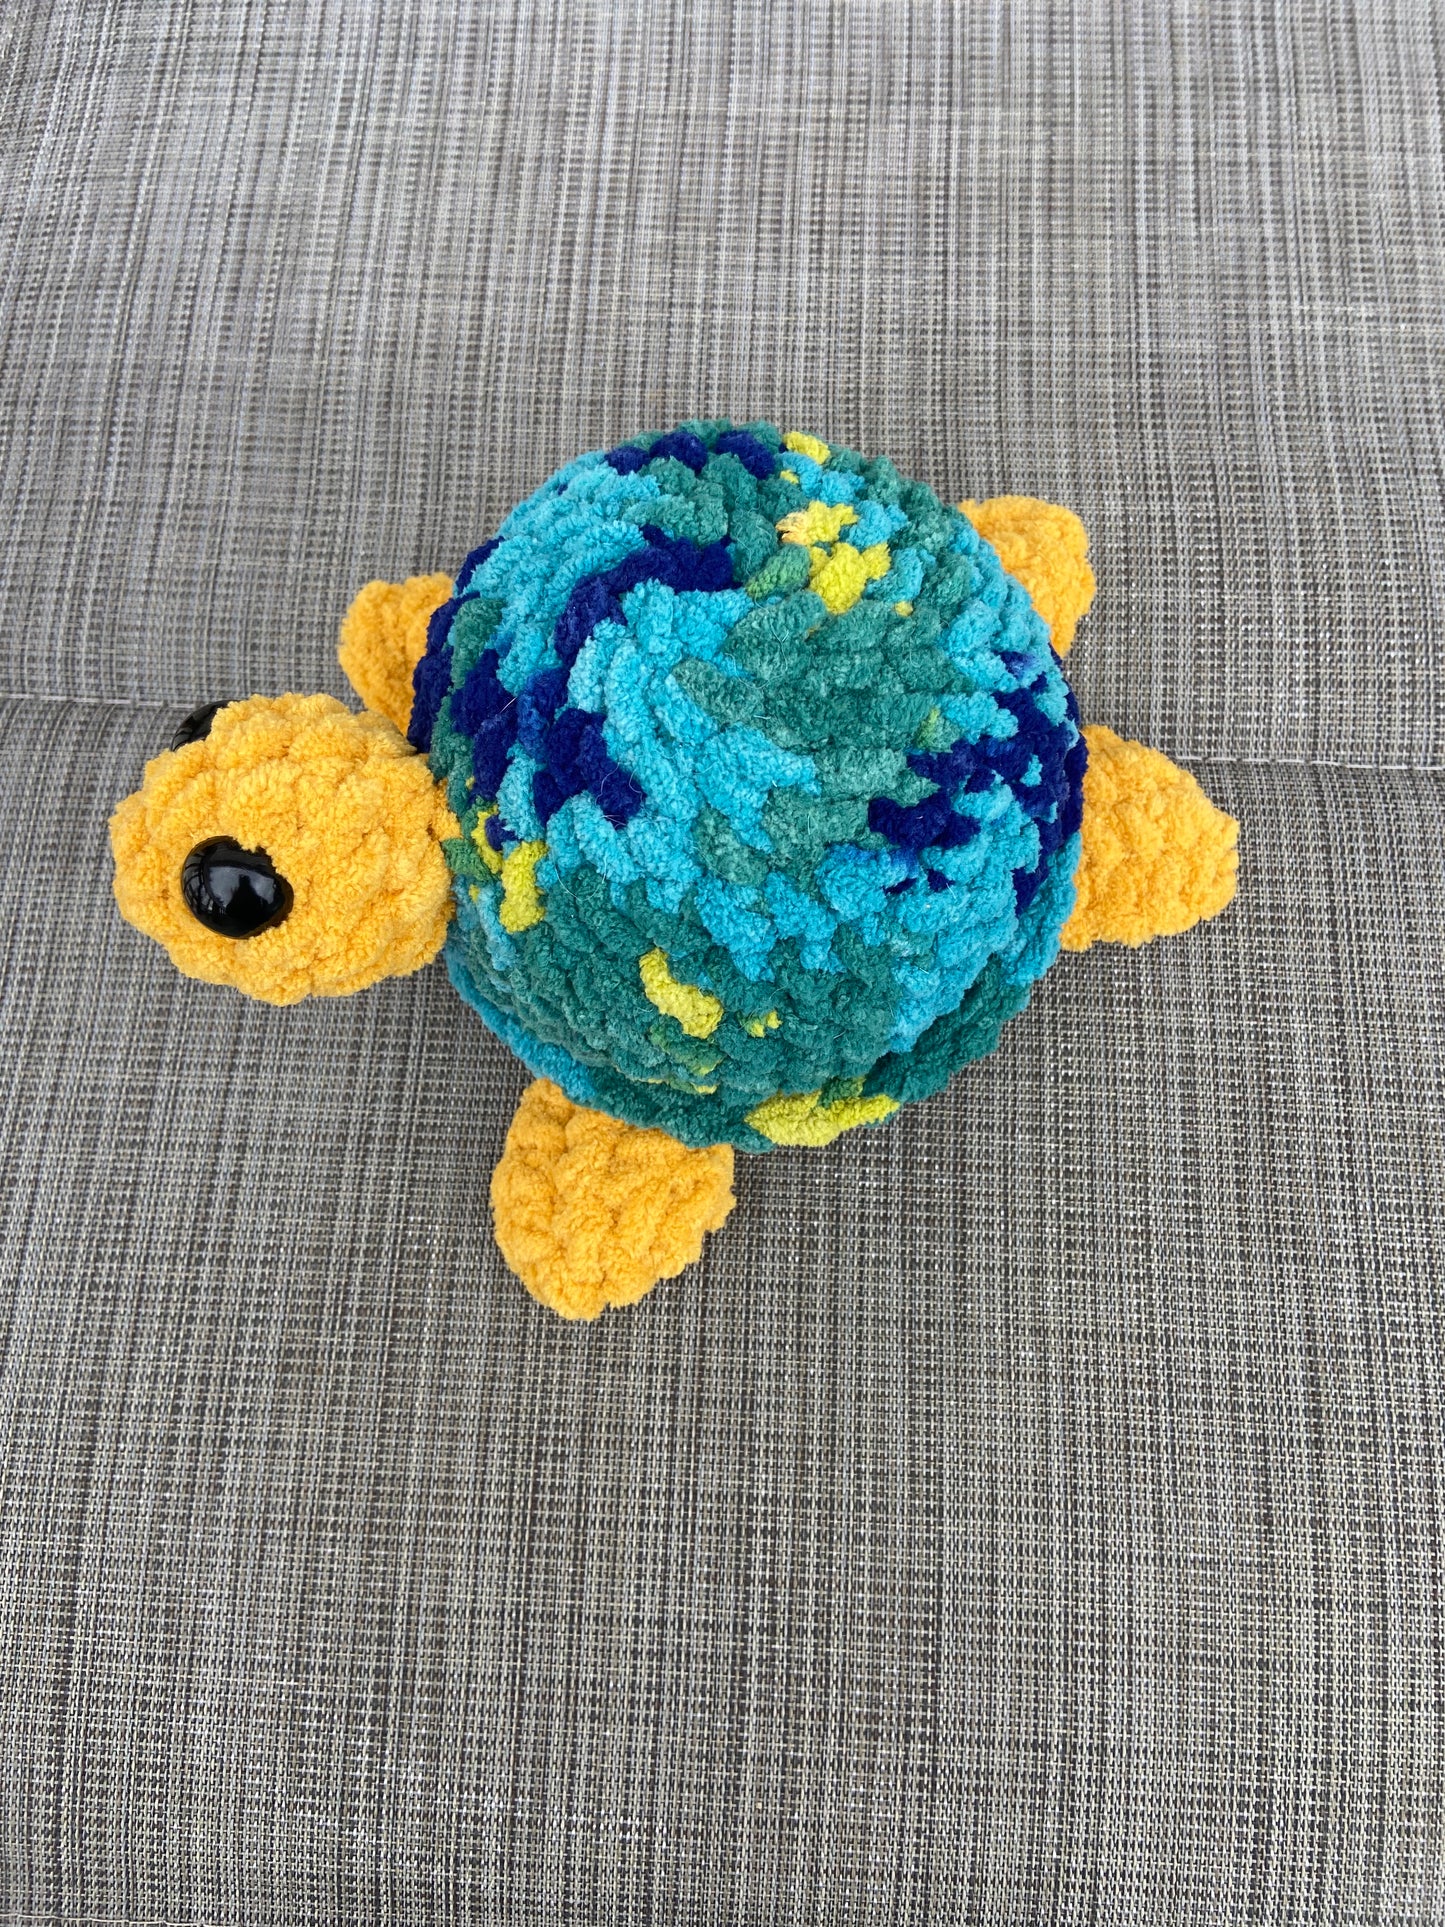 Crochet sea turtle amigurumi with lifelike details